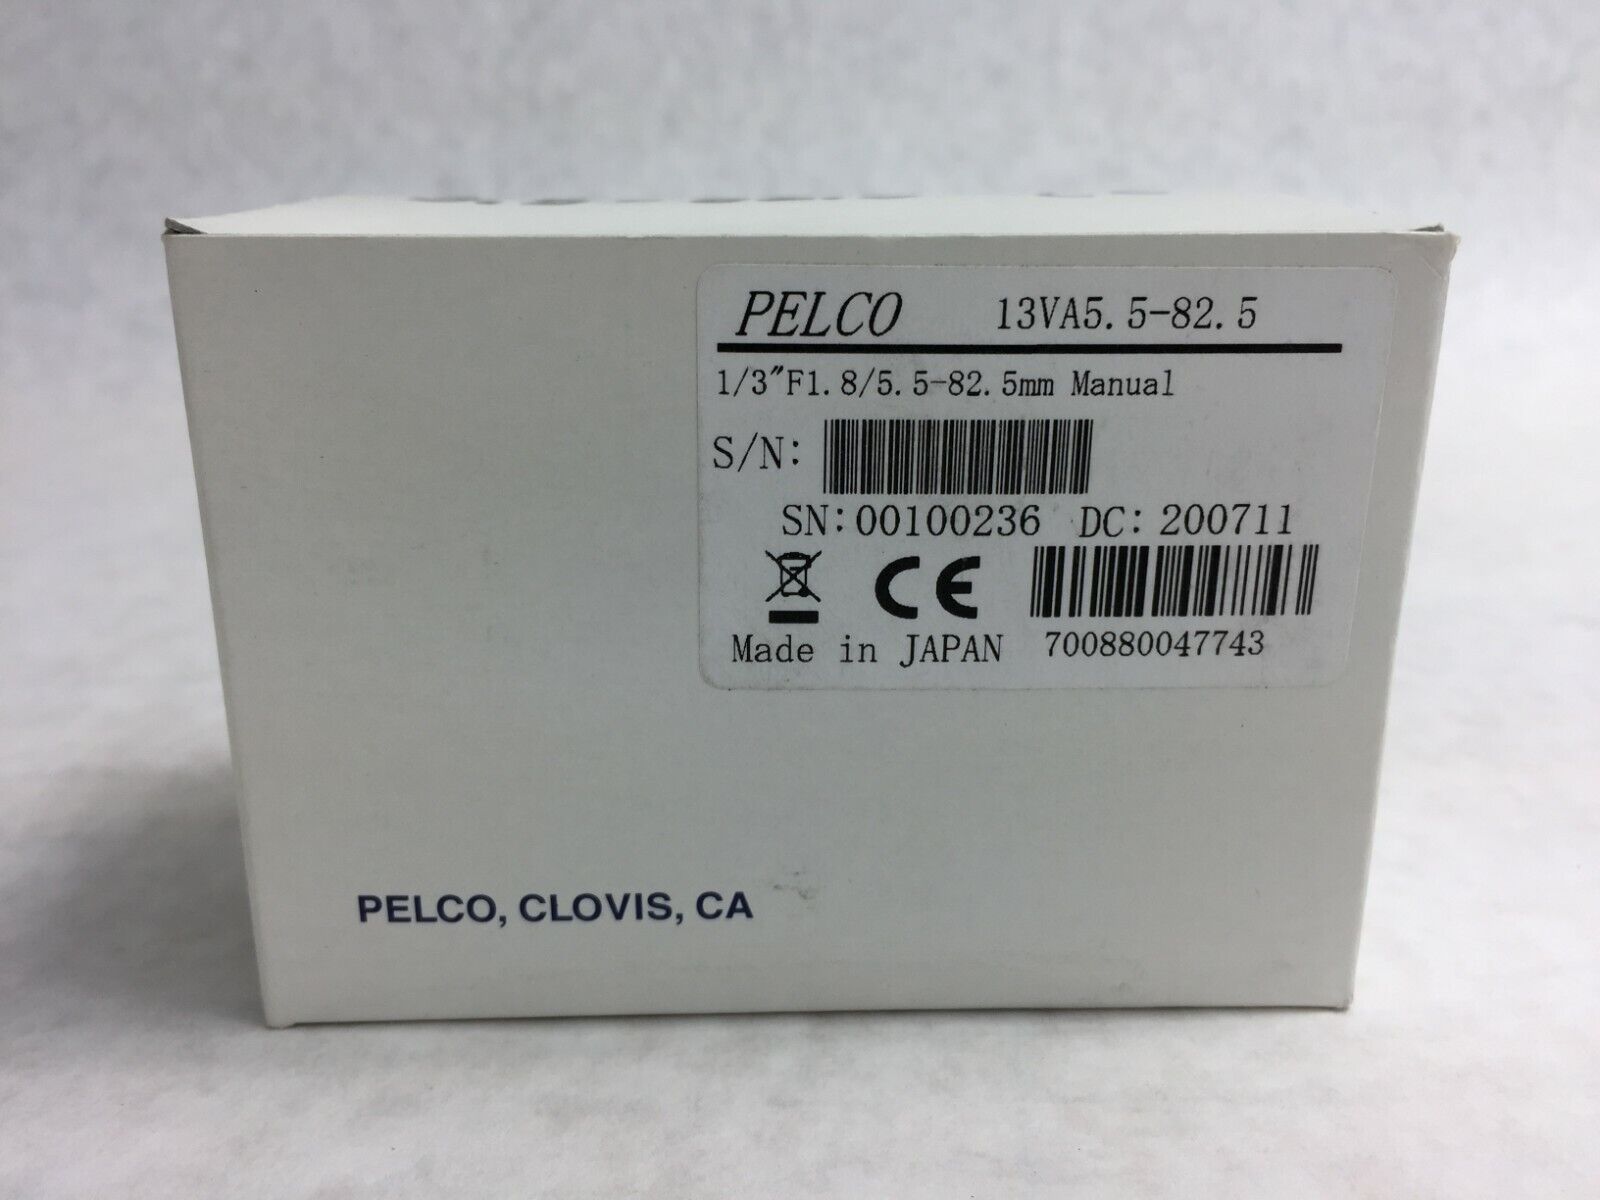 PELCO F1.8/5.5-82.5mm  Security Camera Lens  NIB